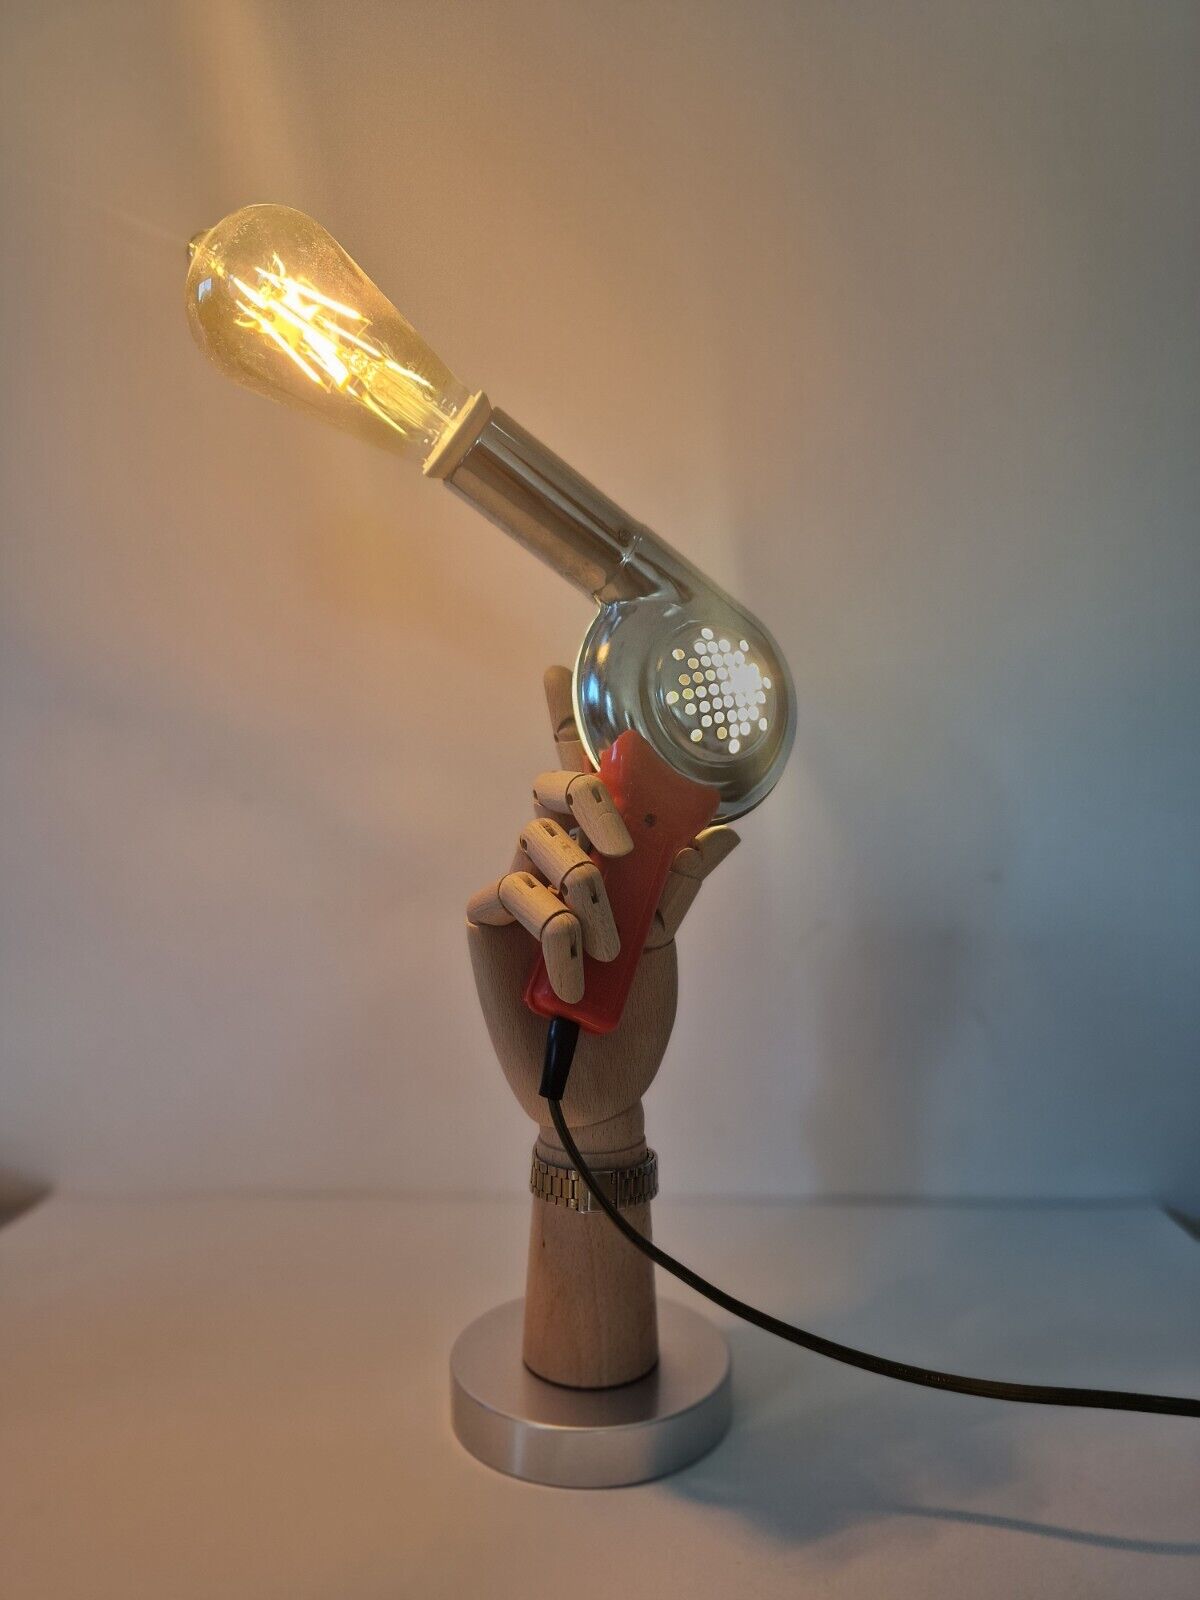 Vintage hair dryer retro desk lamp with 2 LED light bulbs by Illumination Art